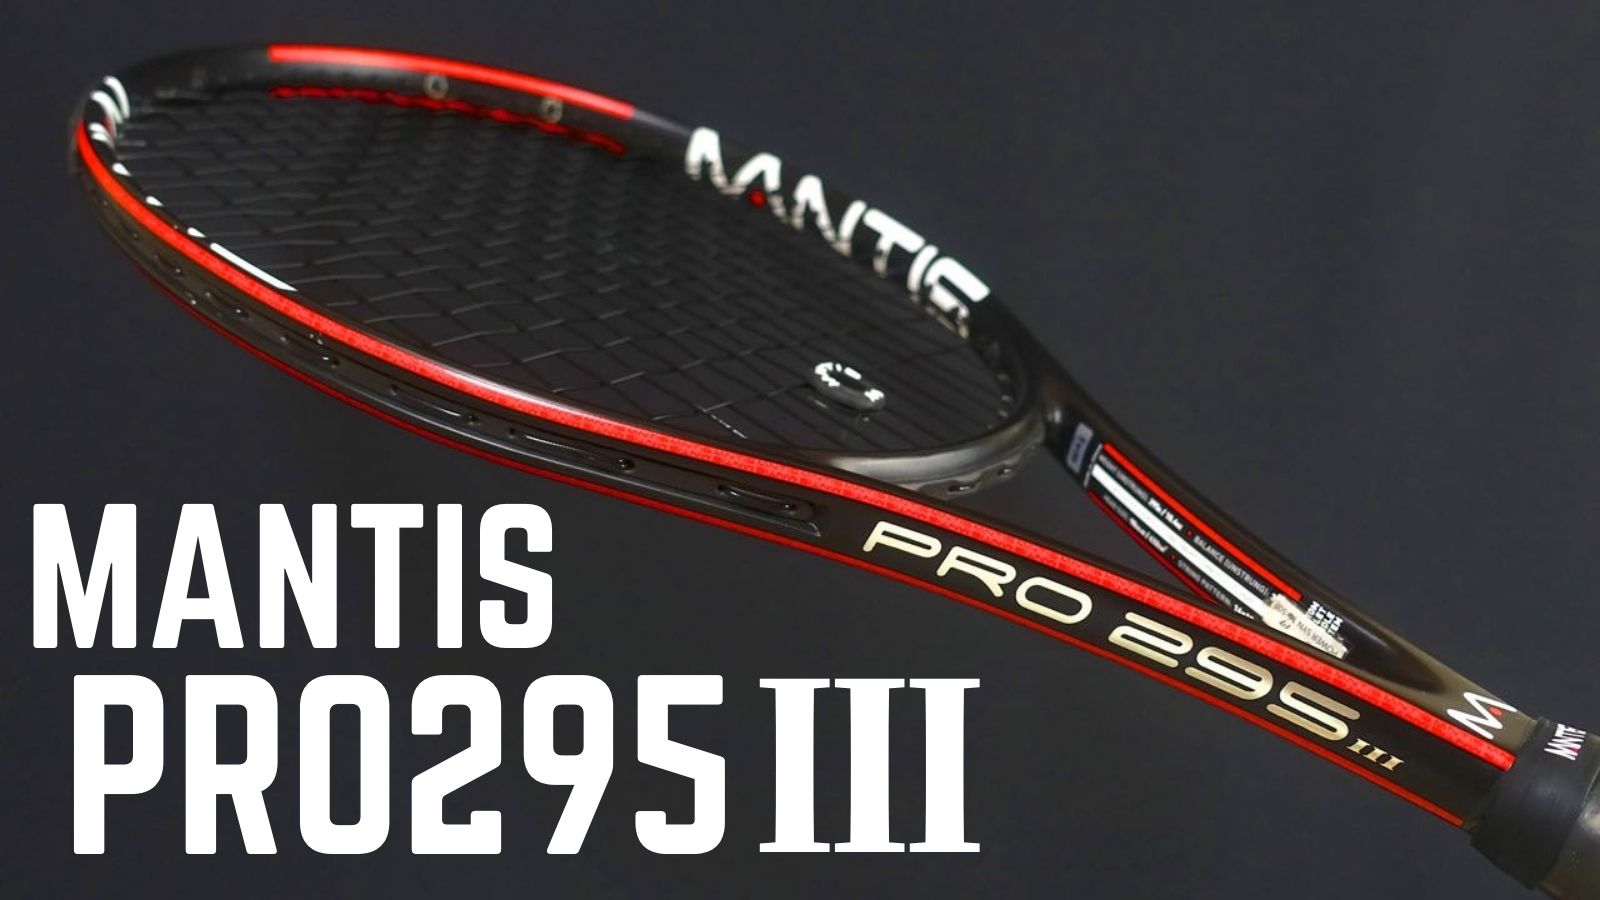 27inch素材テニスラケット マンティス PRO 295 II(G2) 98inch 295g